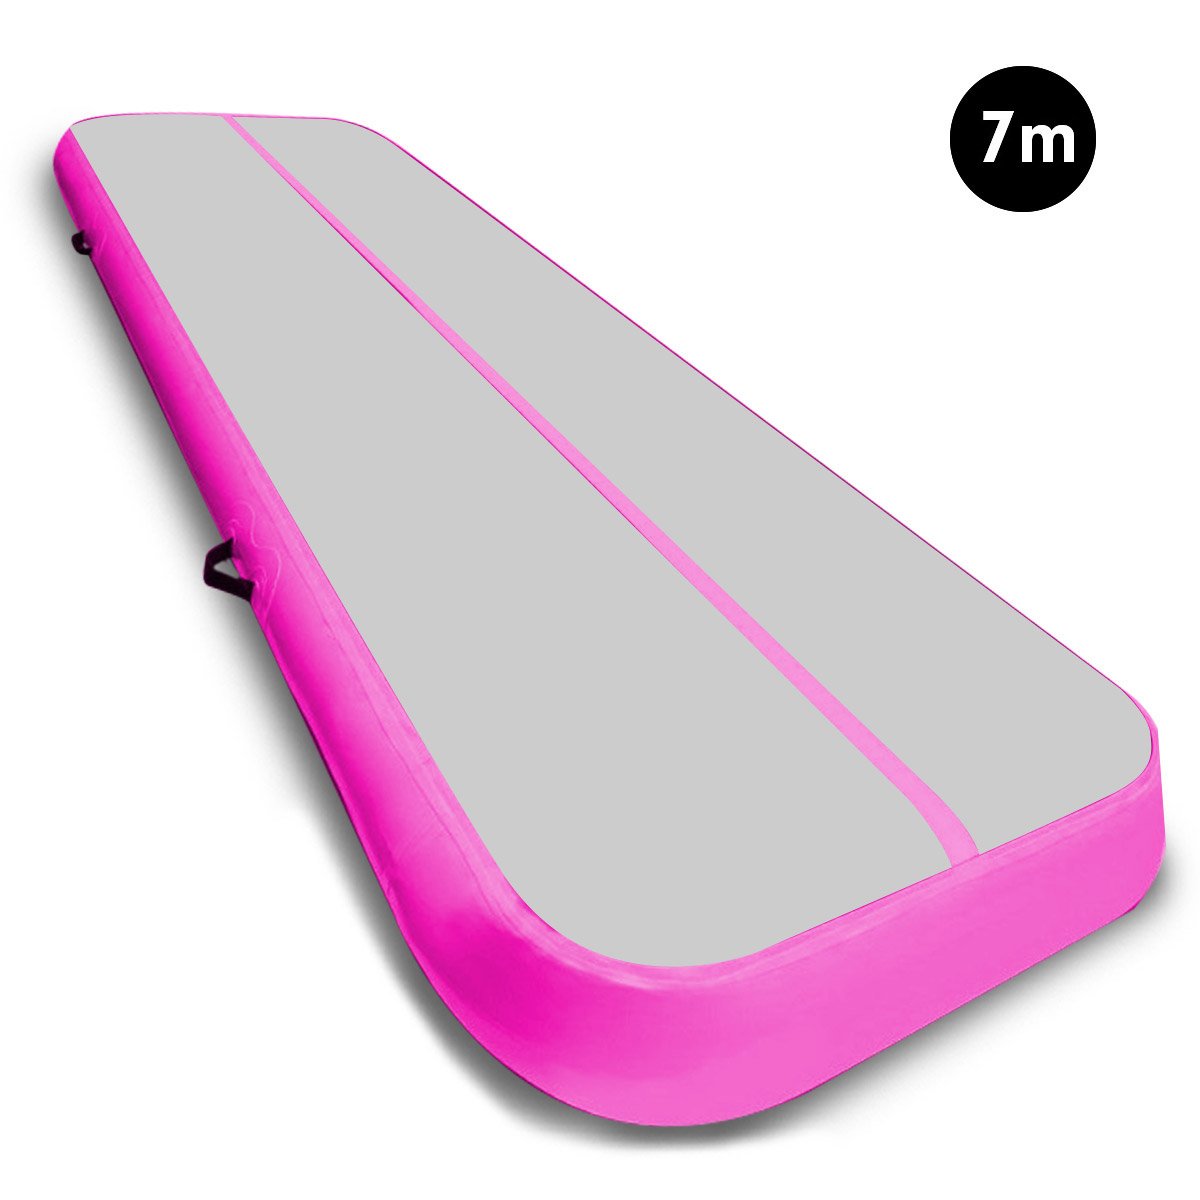 7m x 1m Air Track Inflatable Gymnastics Mat Tumbling - Grey Pink 1